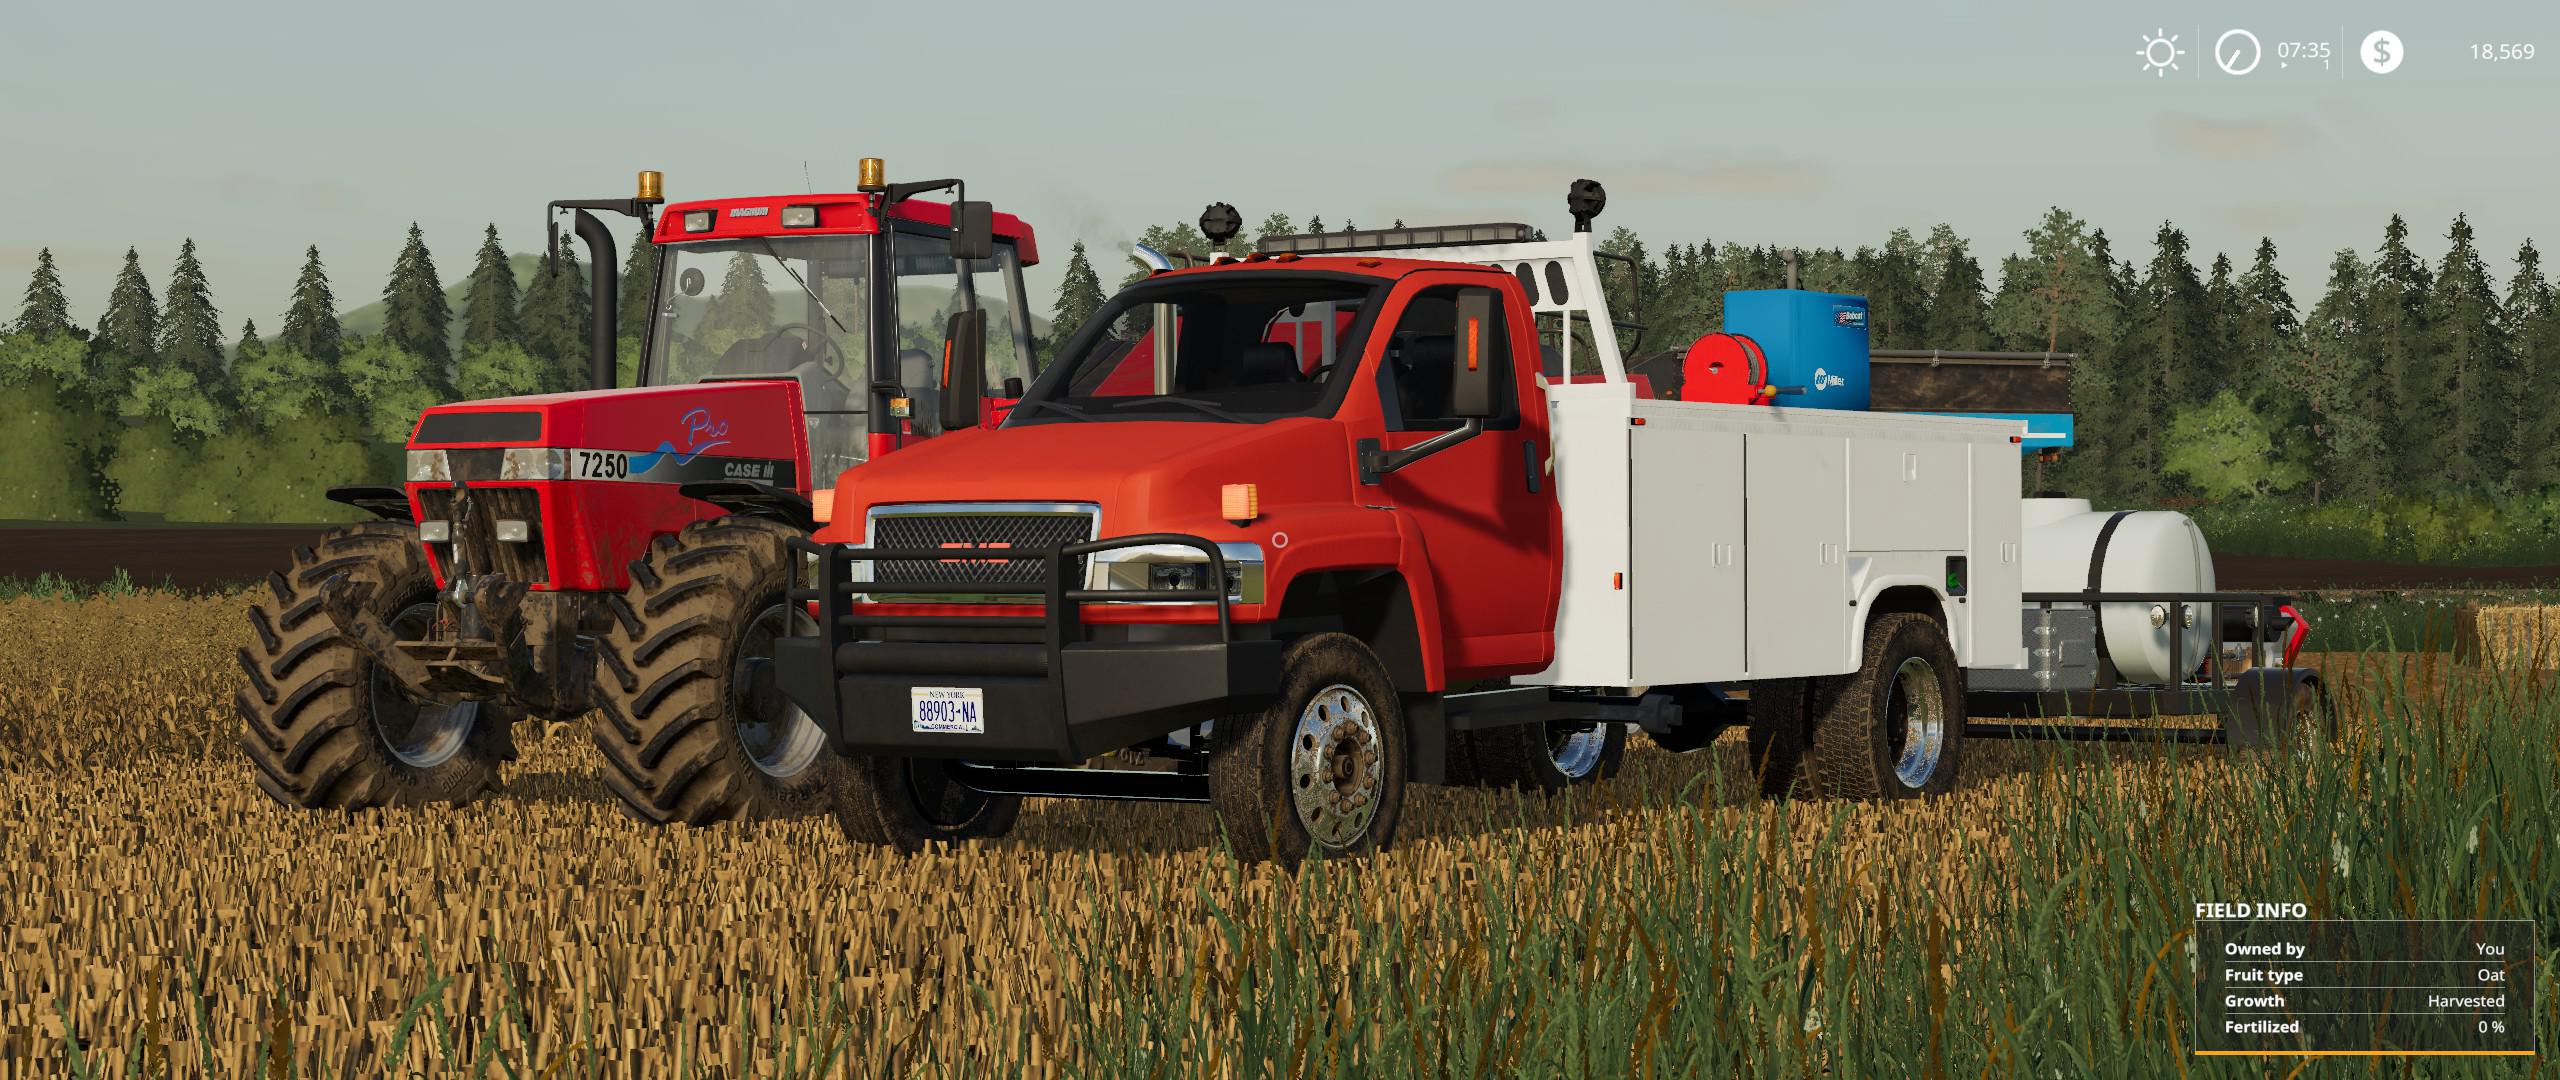 2005 GMC Topkick Service Truck v1.0 LS19 - Farming Simulator 19 mod